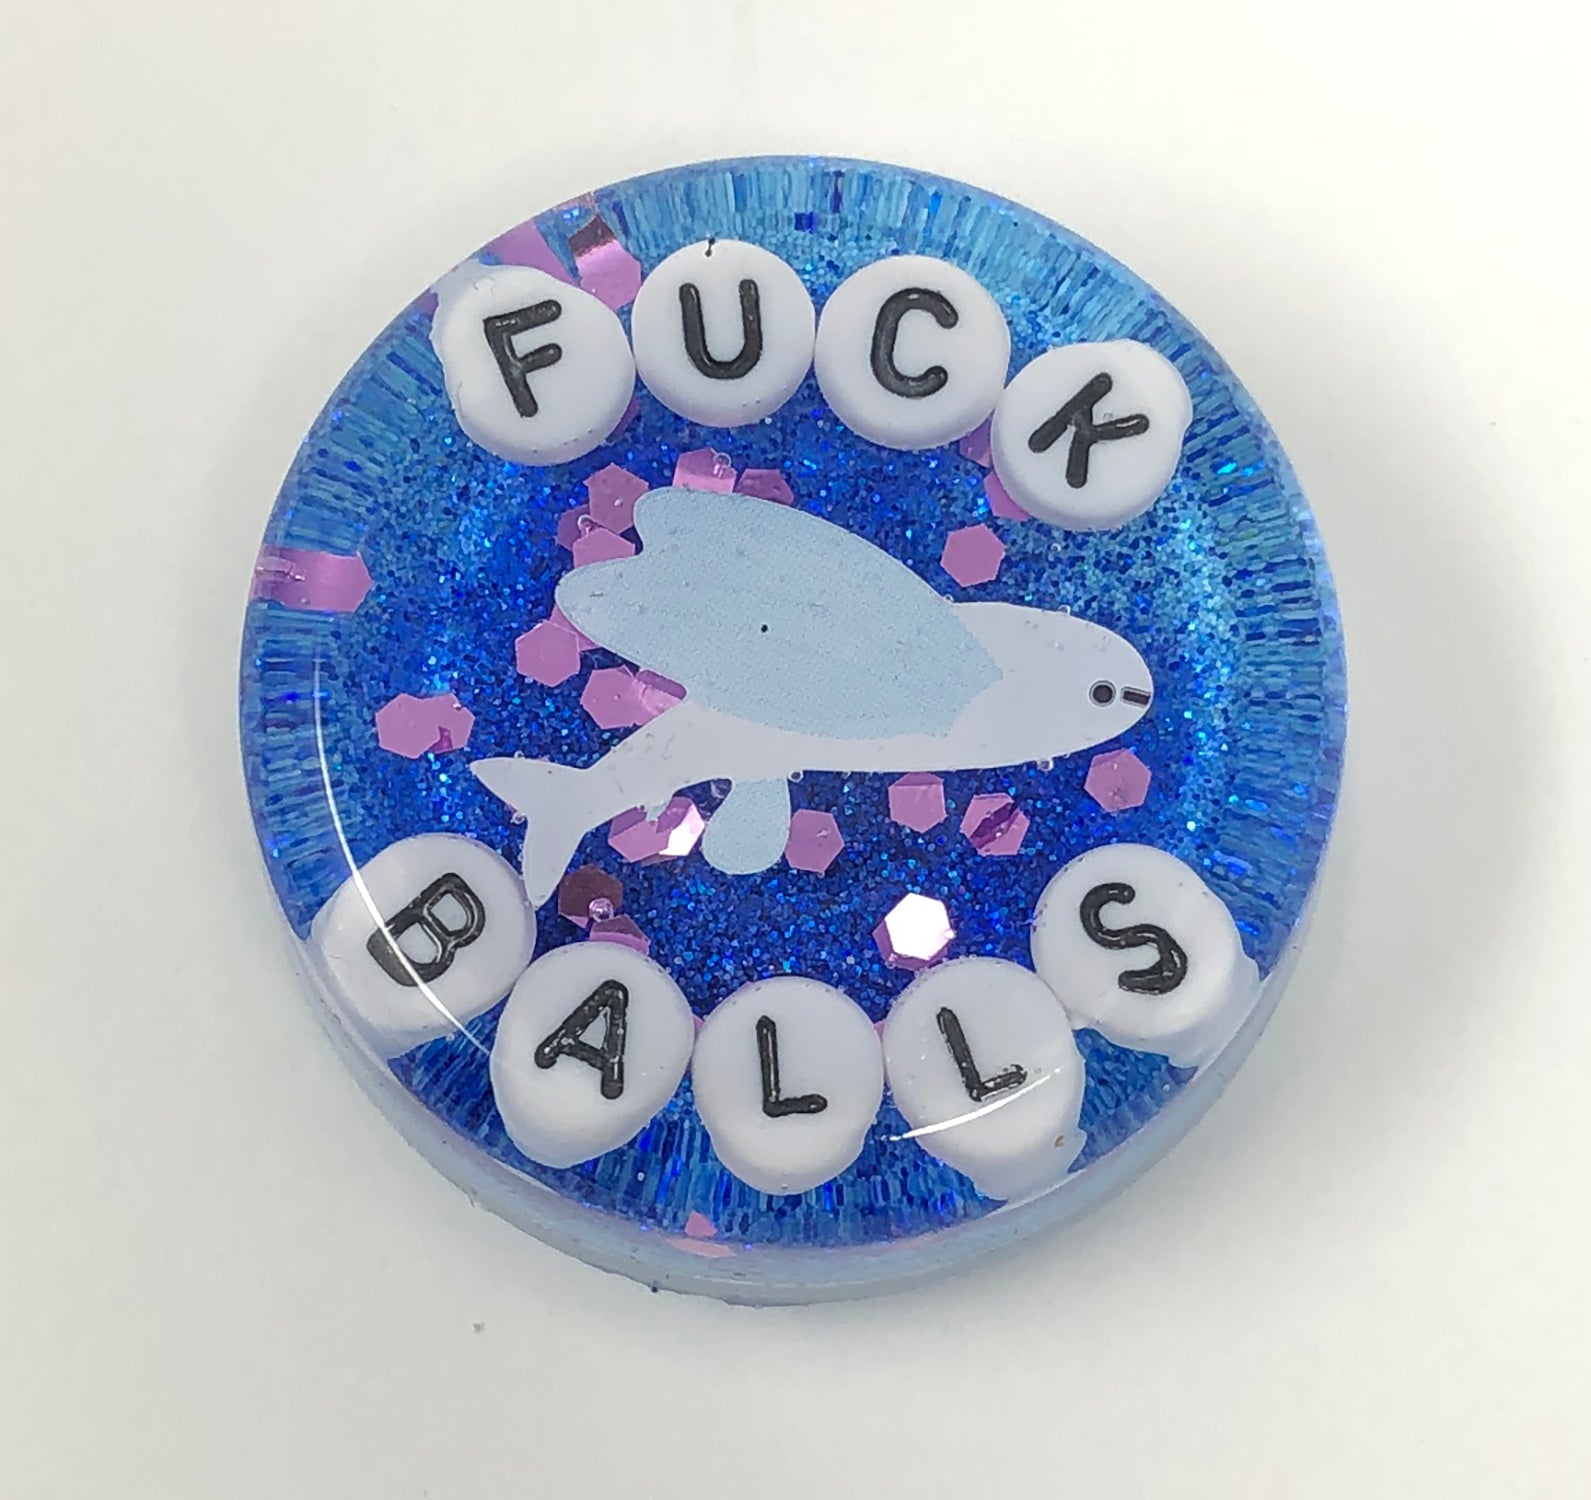 Fuck Balls - Shower Art - READY TO SHIP